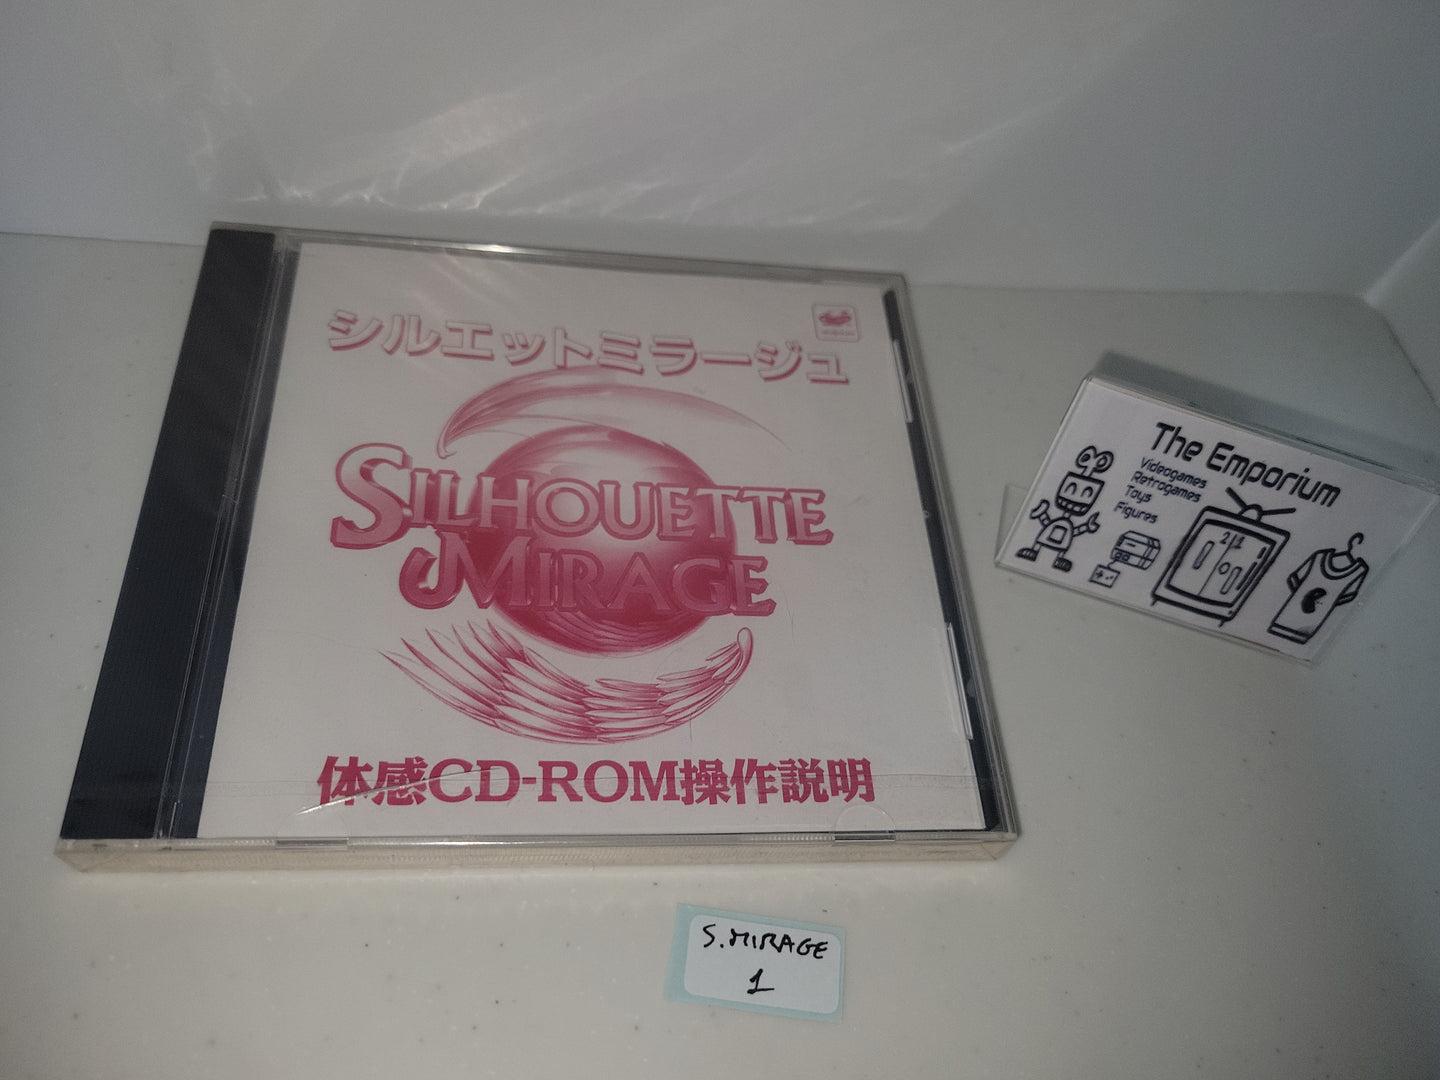 Silhouette Mirage Taikenban (Special Promotion Edition) - Sega Saturn sat stn